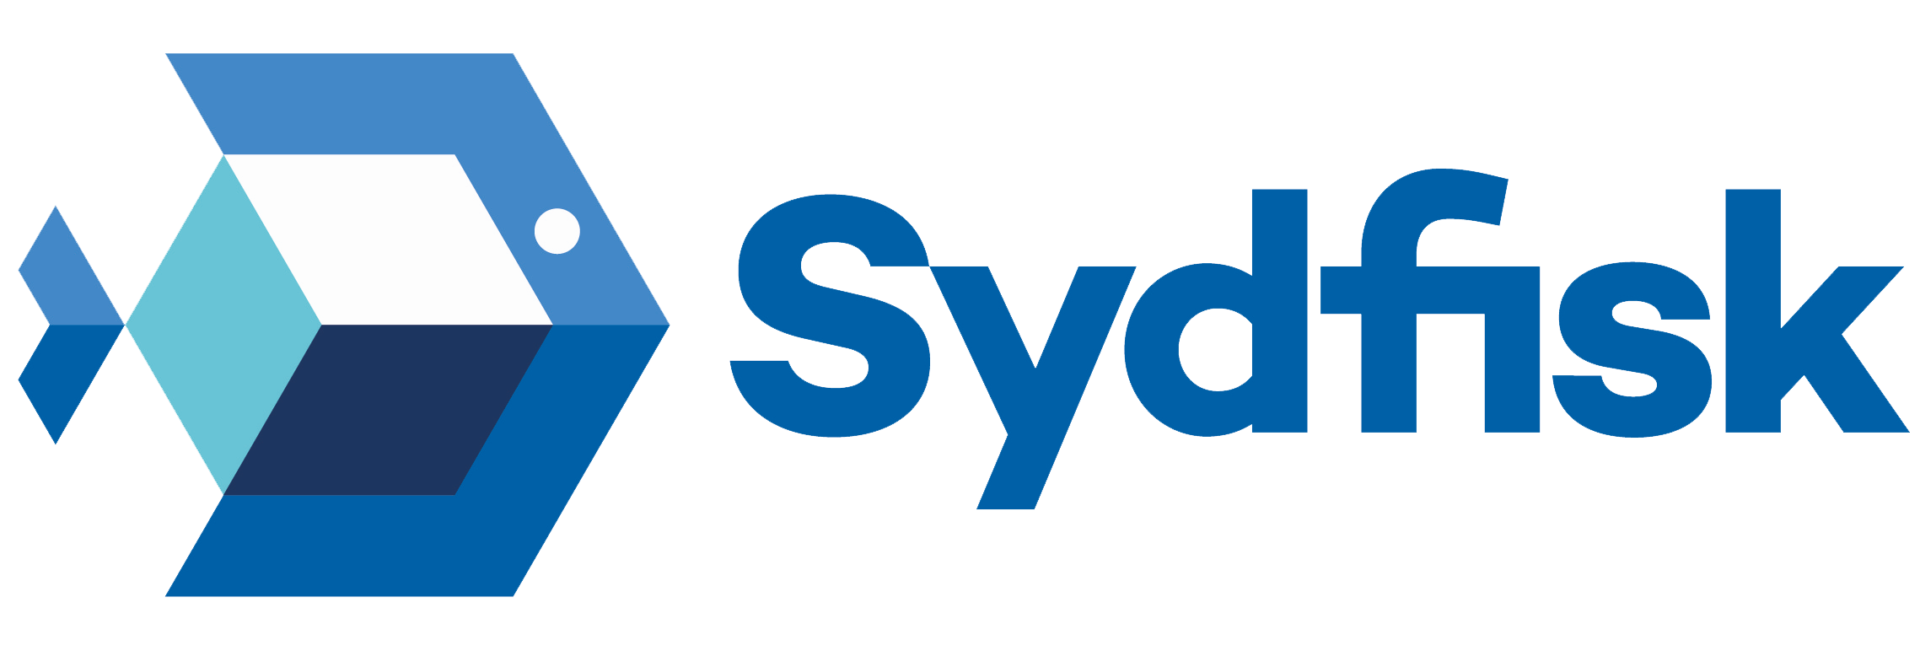 Sydfisk Logo 03mail3 1